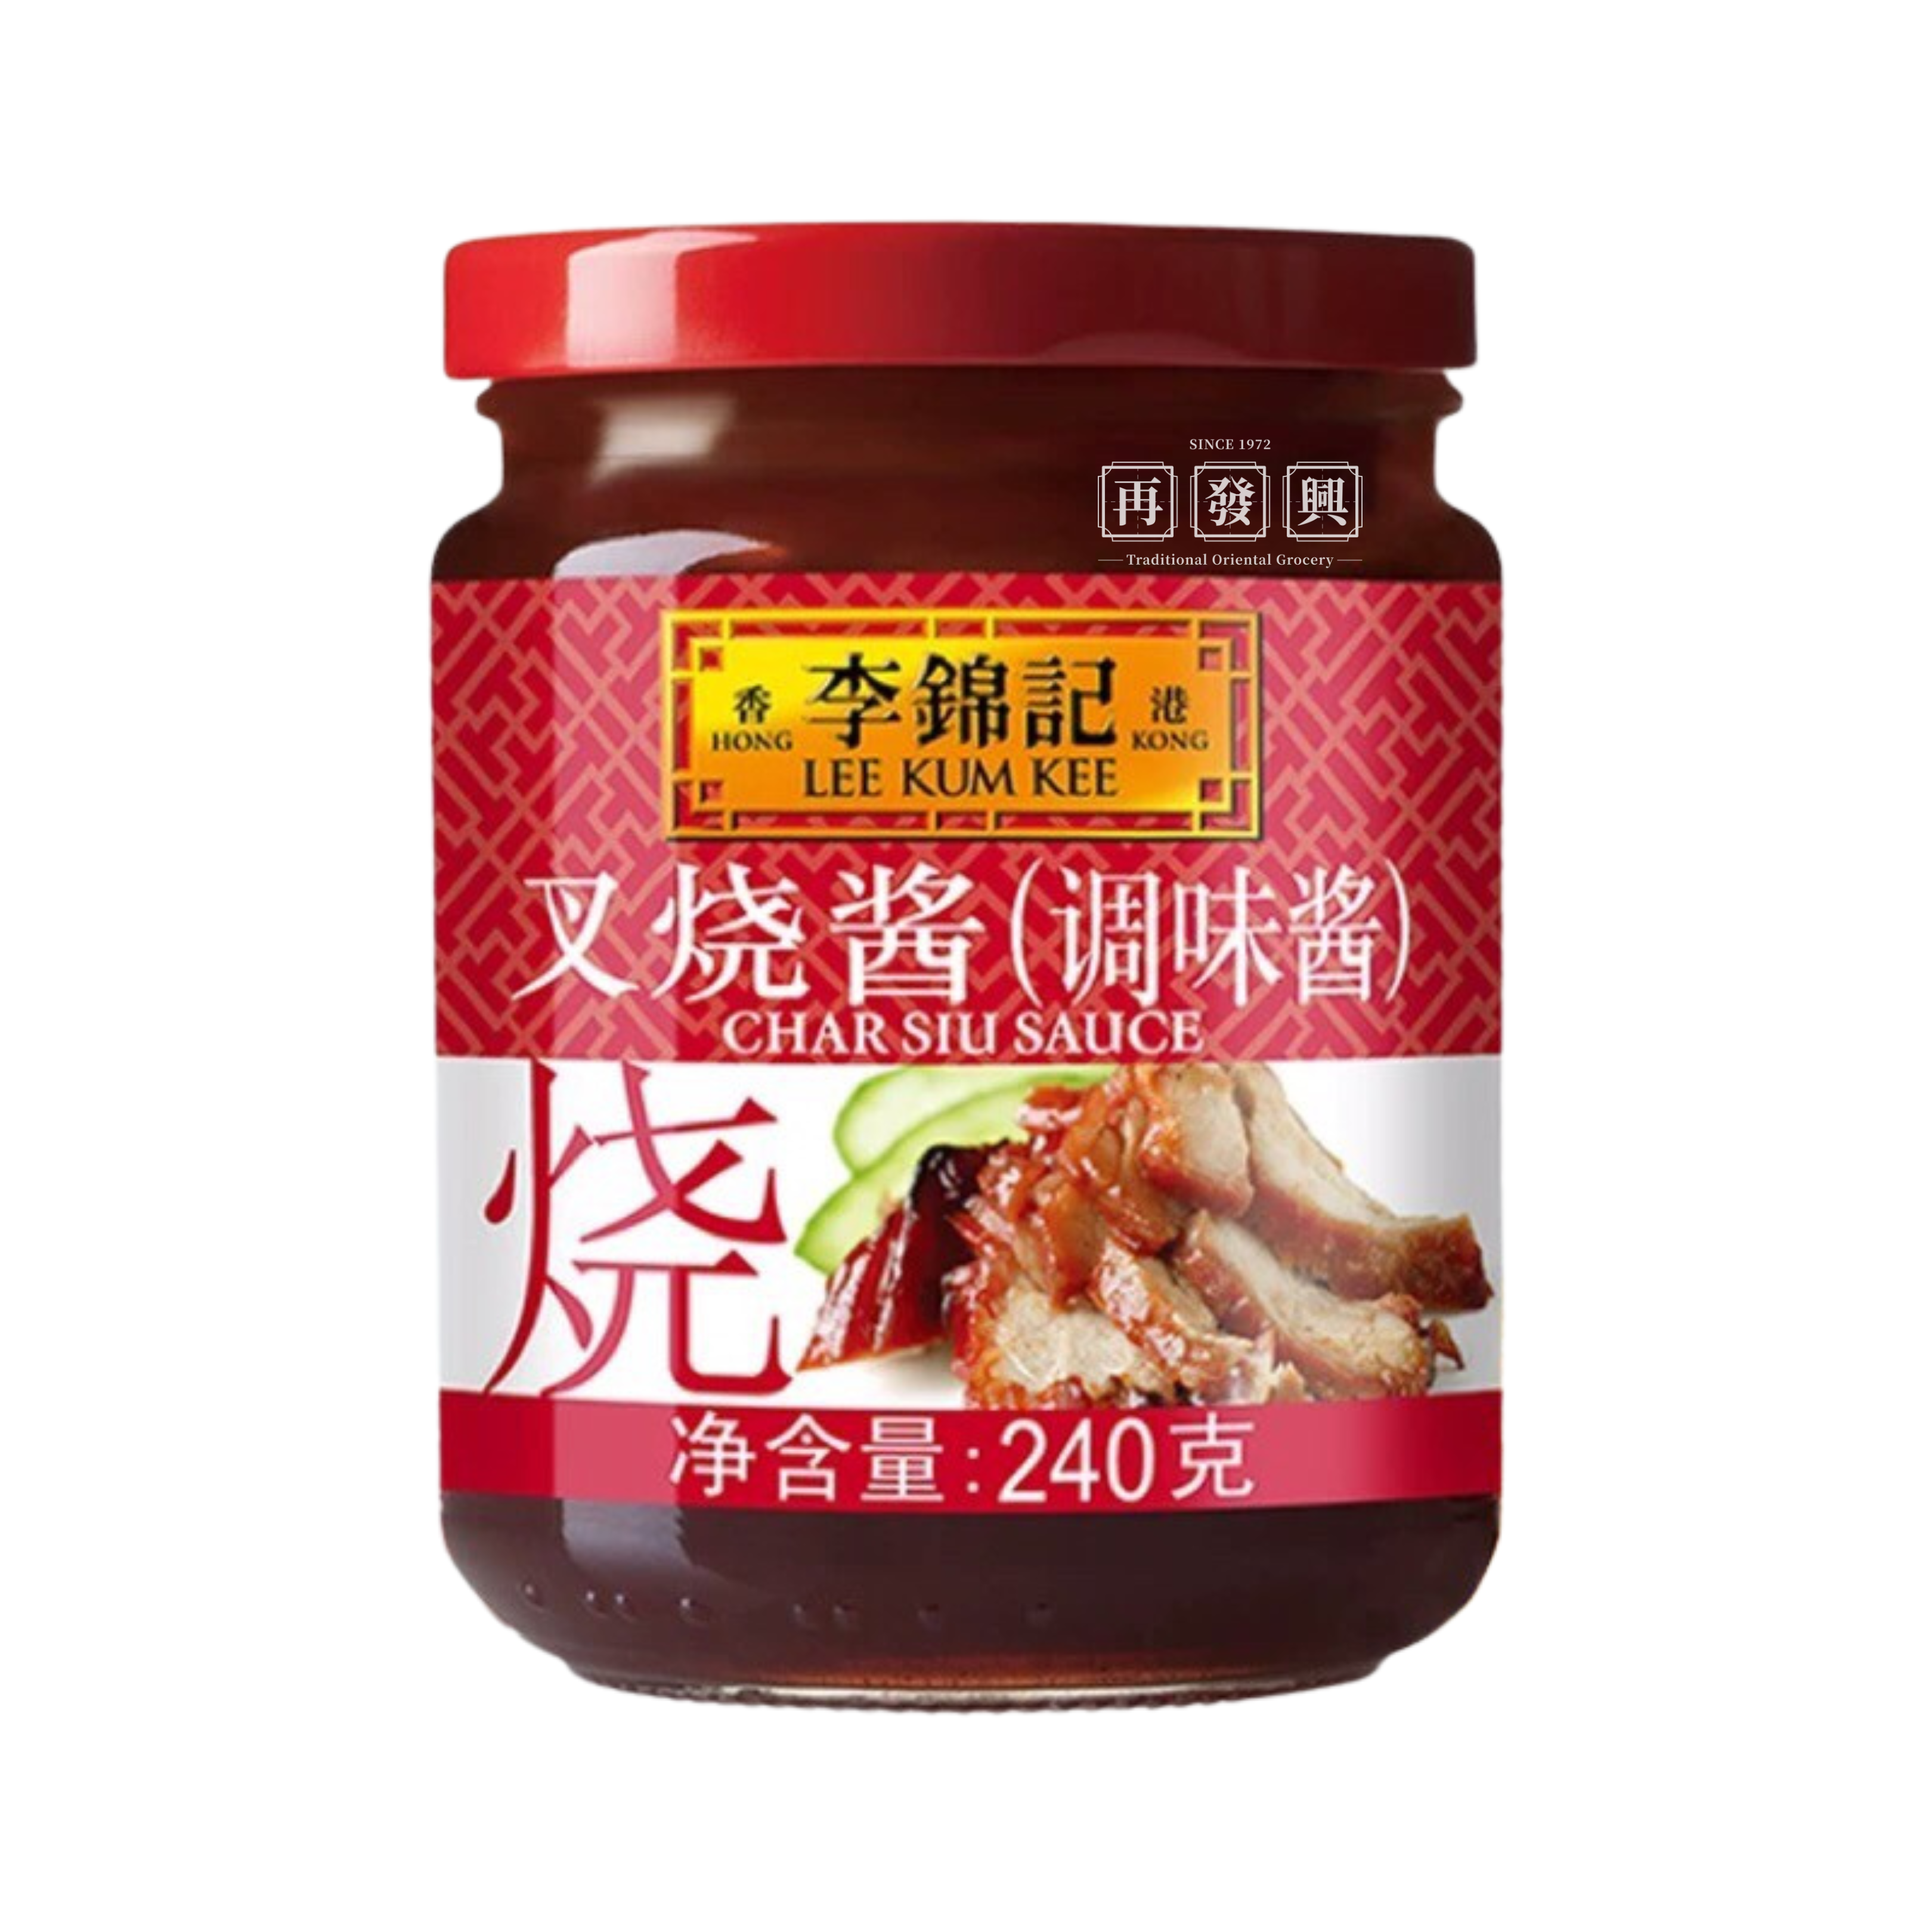 LKK HK Imported Char Siu Sauce 李锦记香港进口叉烧酱 240g